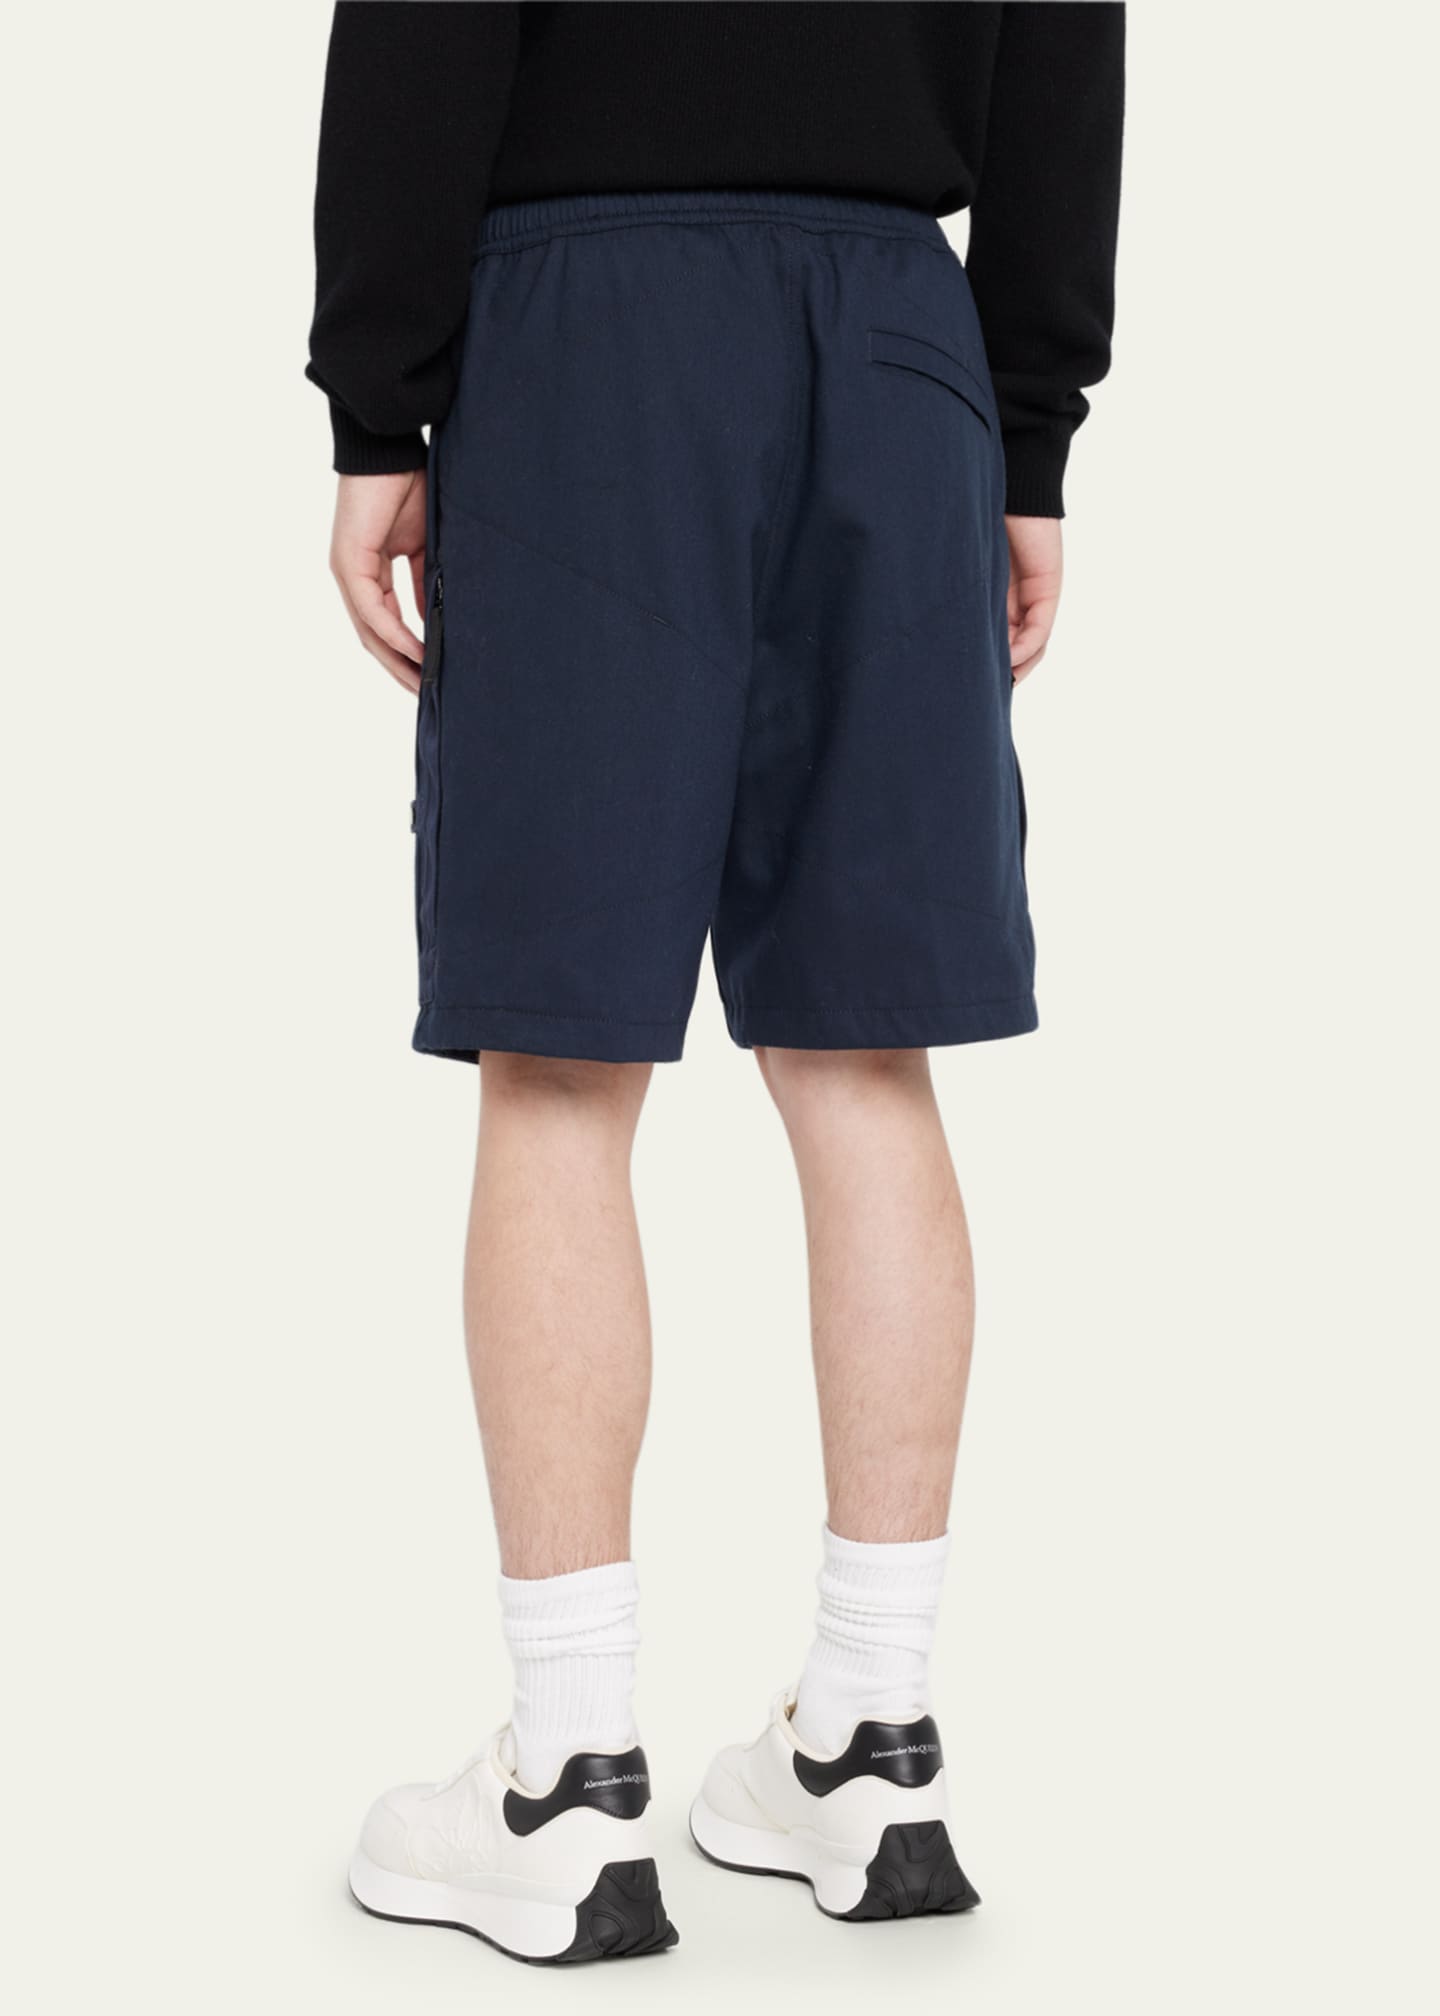 So nakameguro for YGM Stretch  shorts